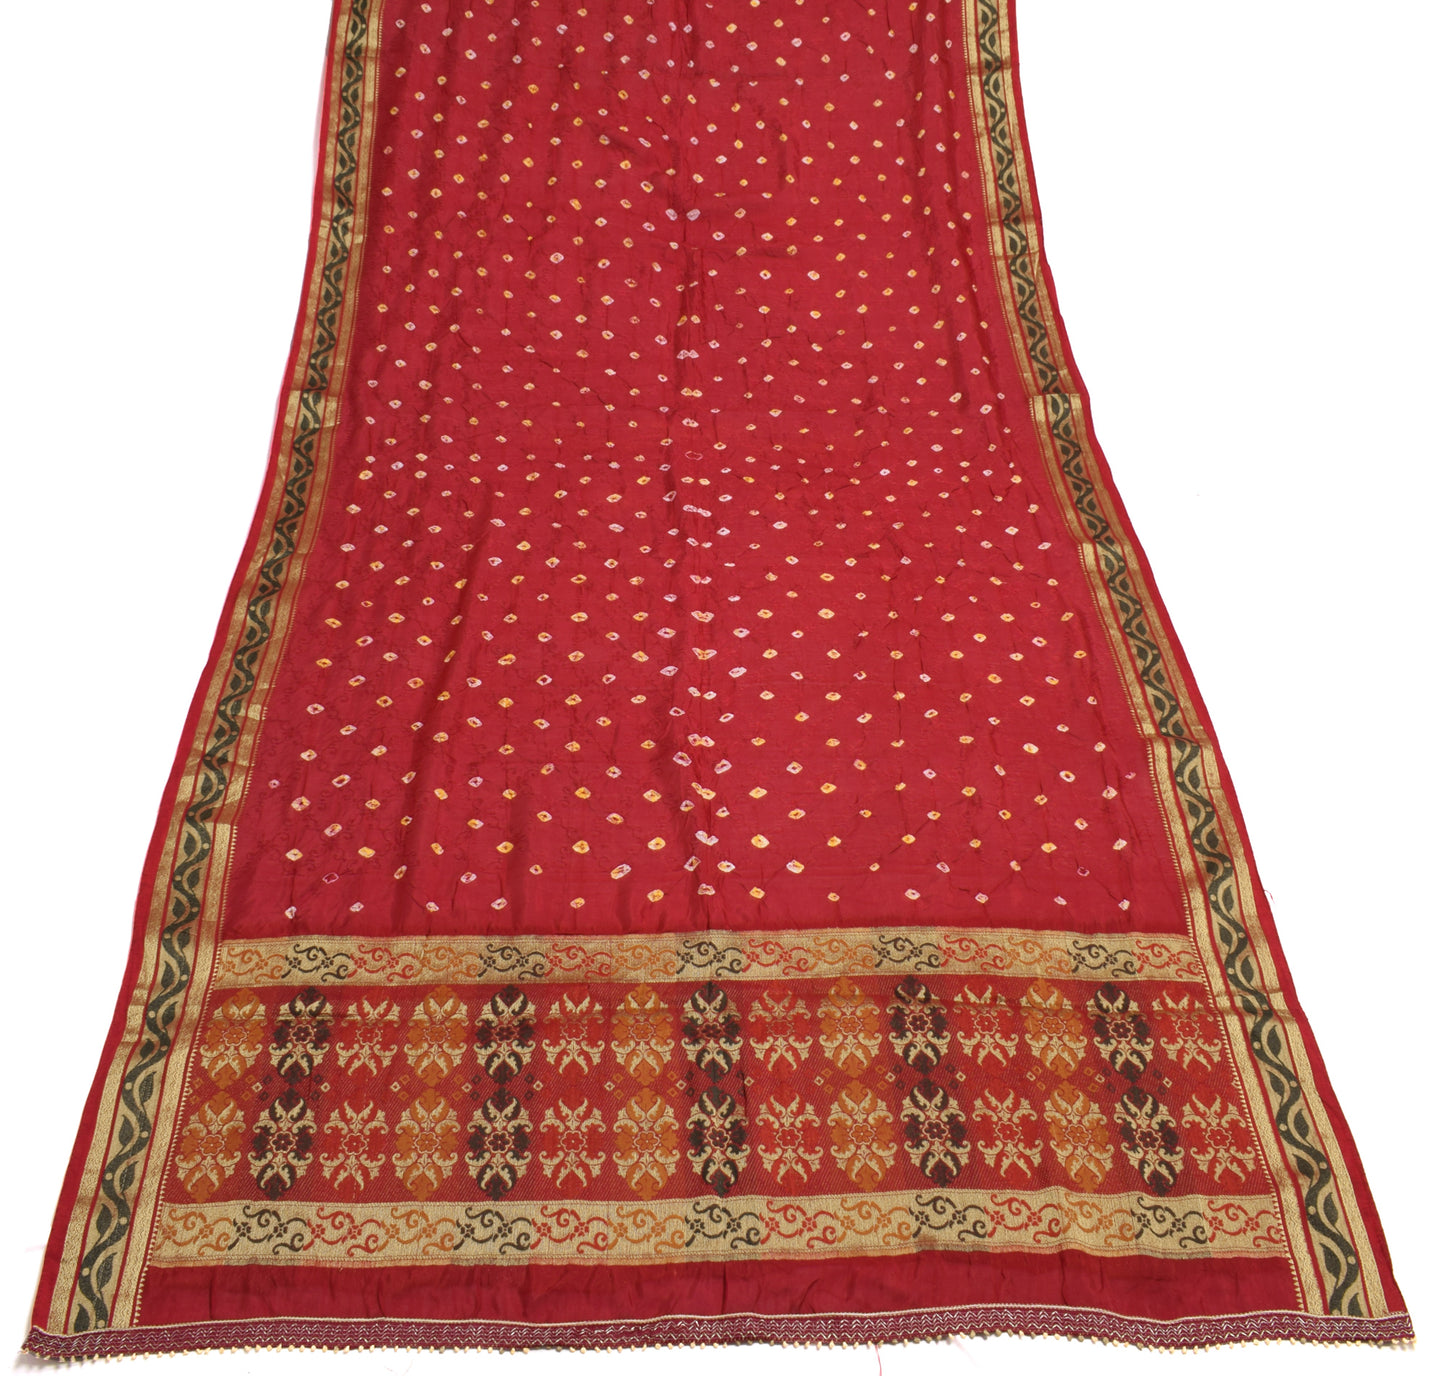 Sushila Vintage Dark Red 100% Pure Silk Dupatta Bandhani Printed Long Stole Veil